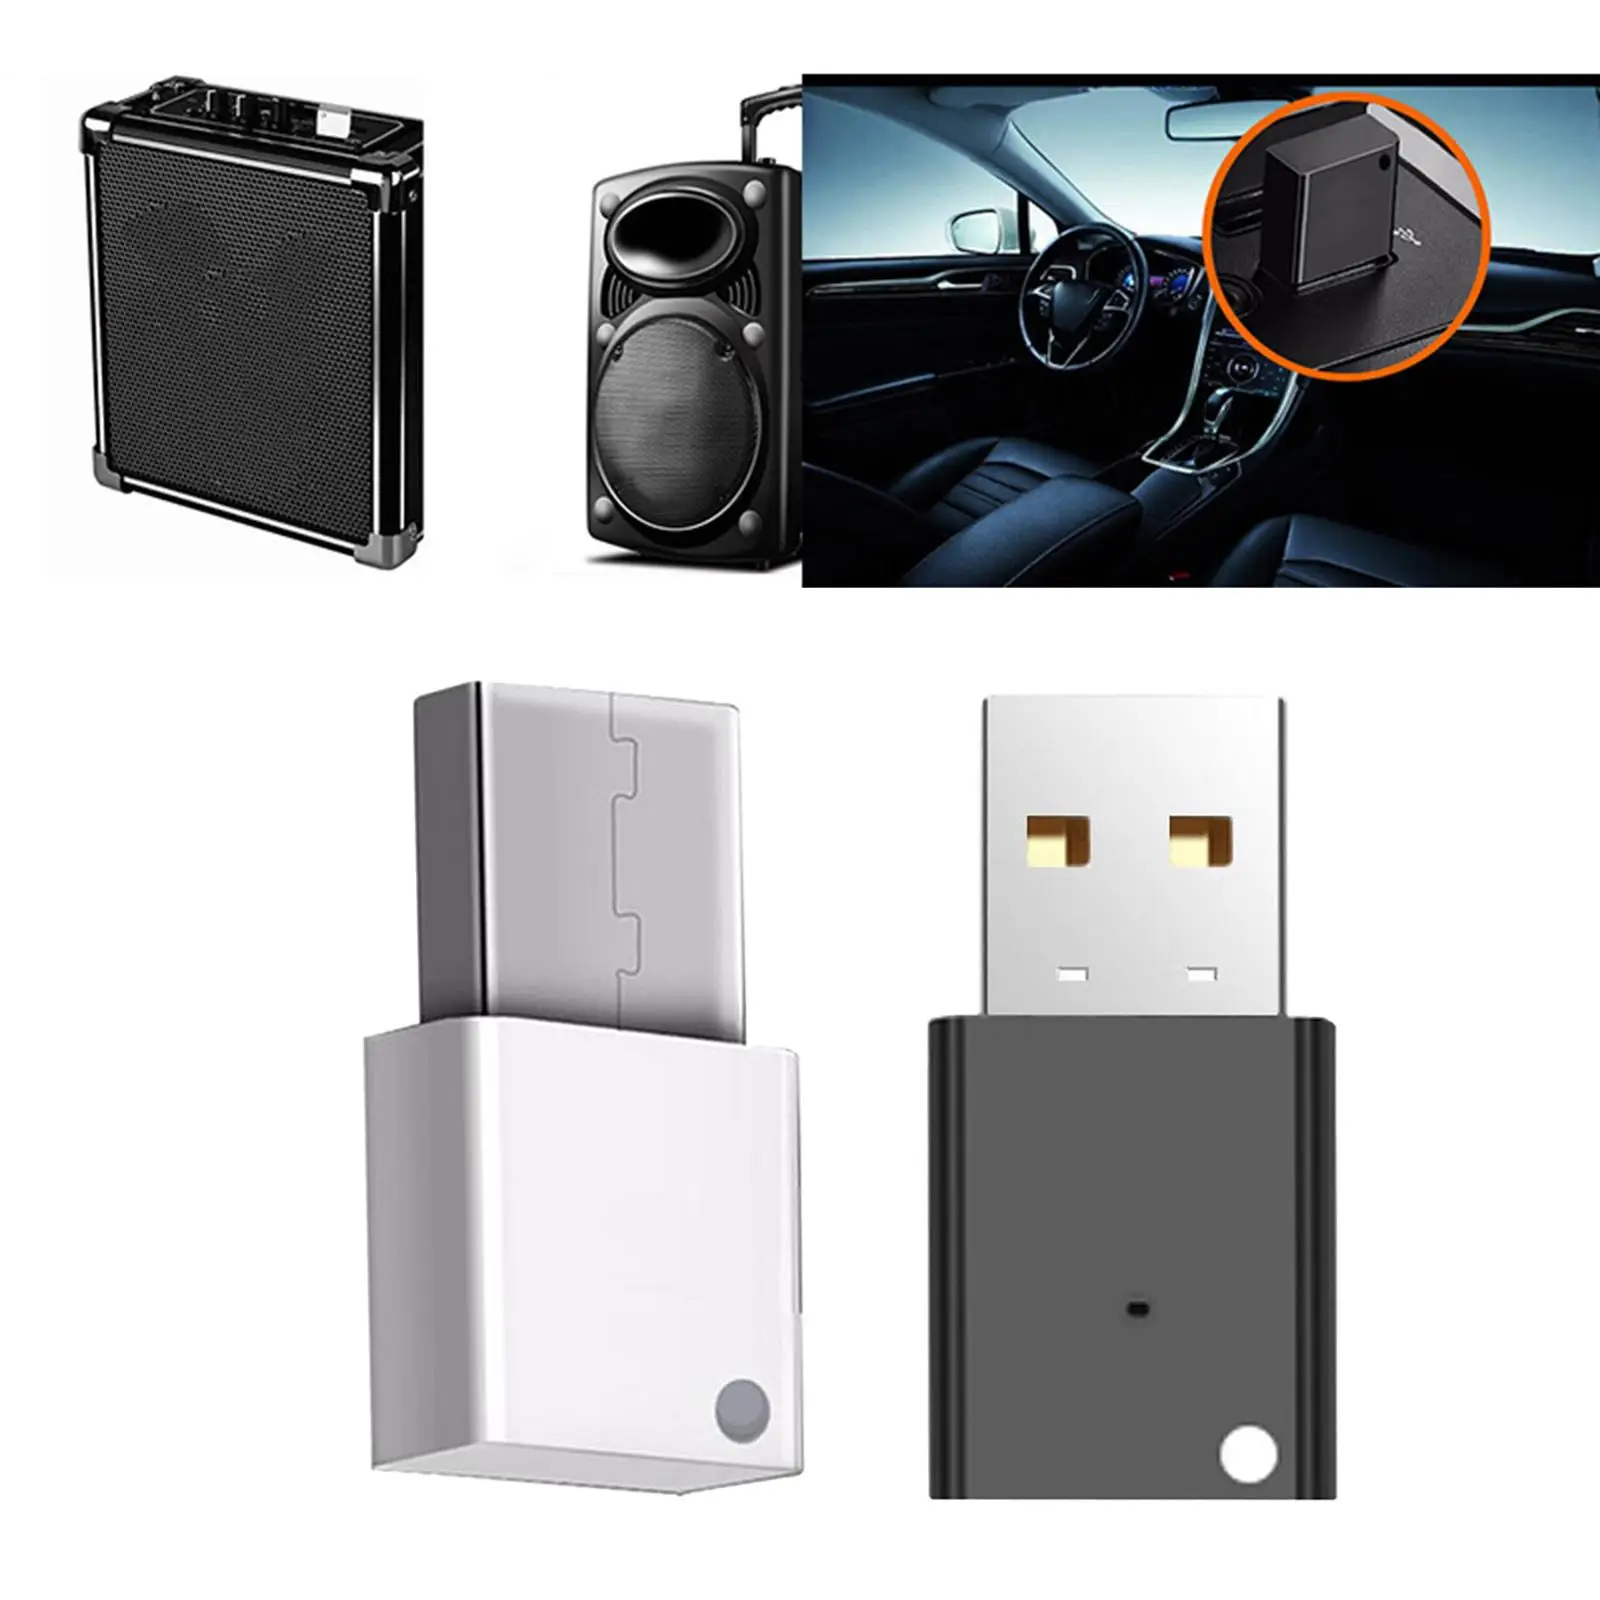  5.0 USB Adapter Mini Transfer   for Car Desktop Laptop Windows Computer